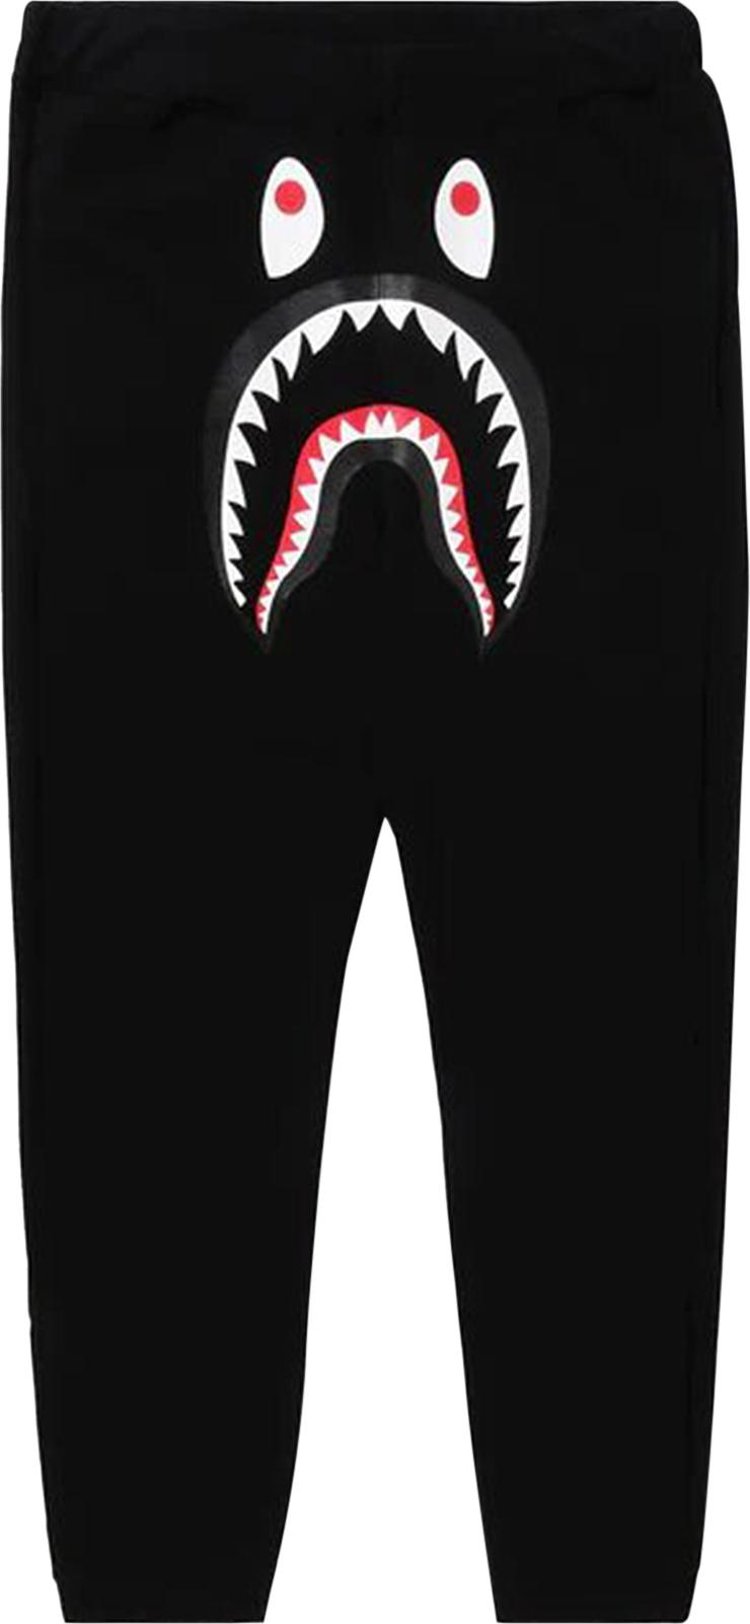 Bape Shark Slim Sweatpants Black